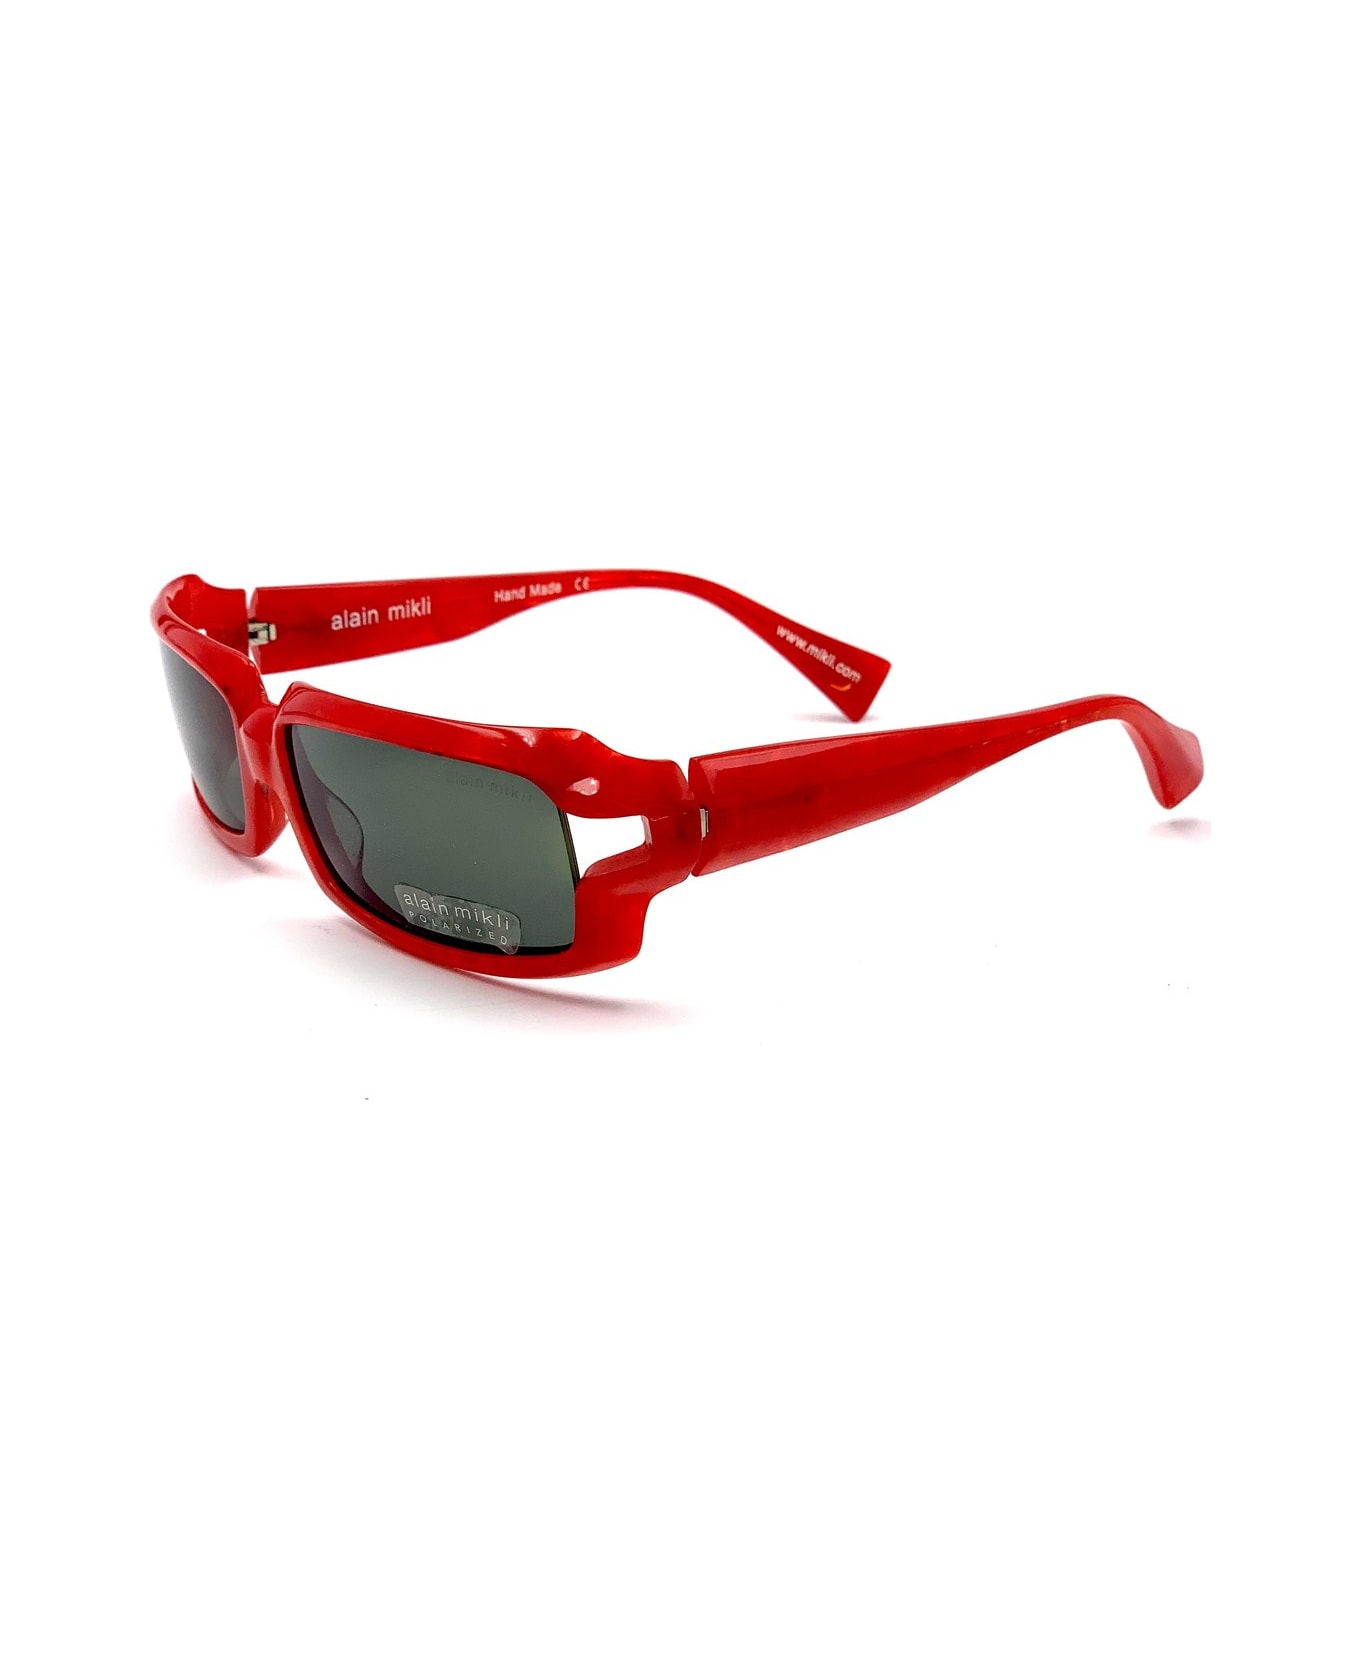 Alain Mikli A0488 Sunglasses - Rosso サングラス